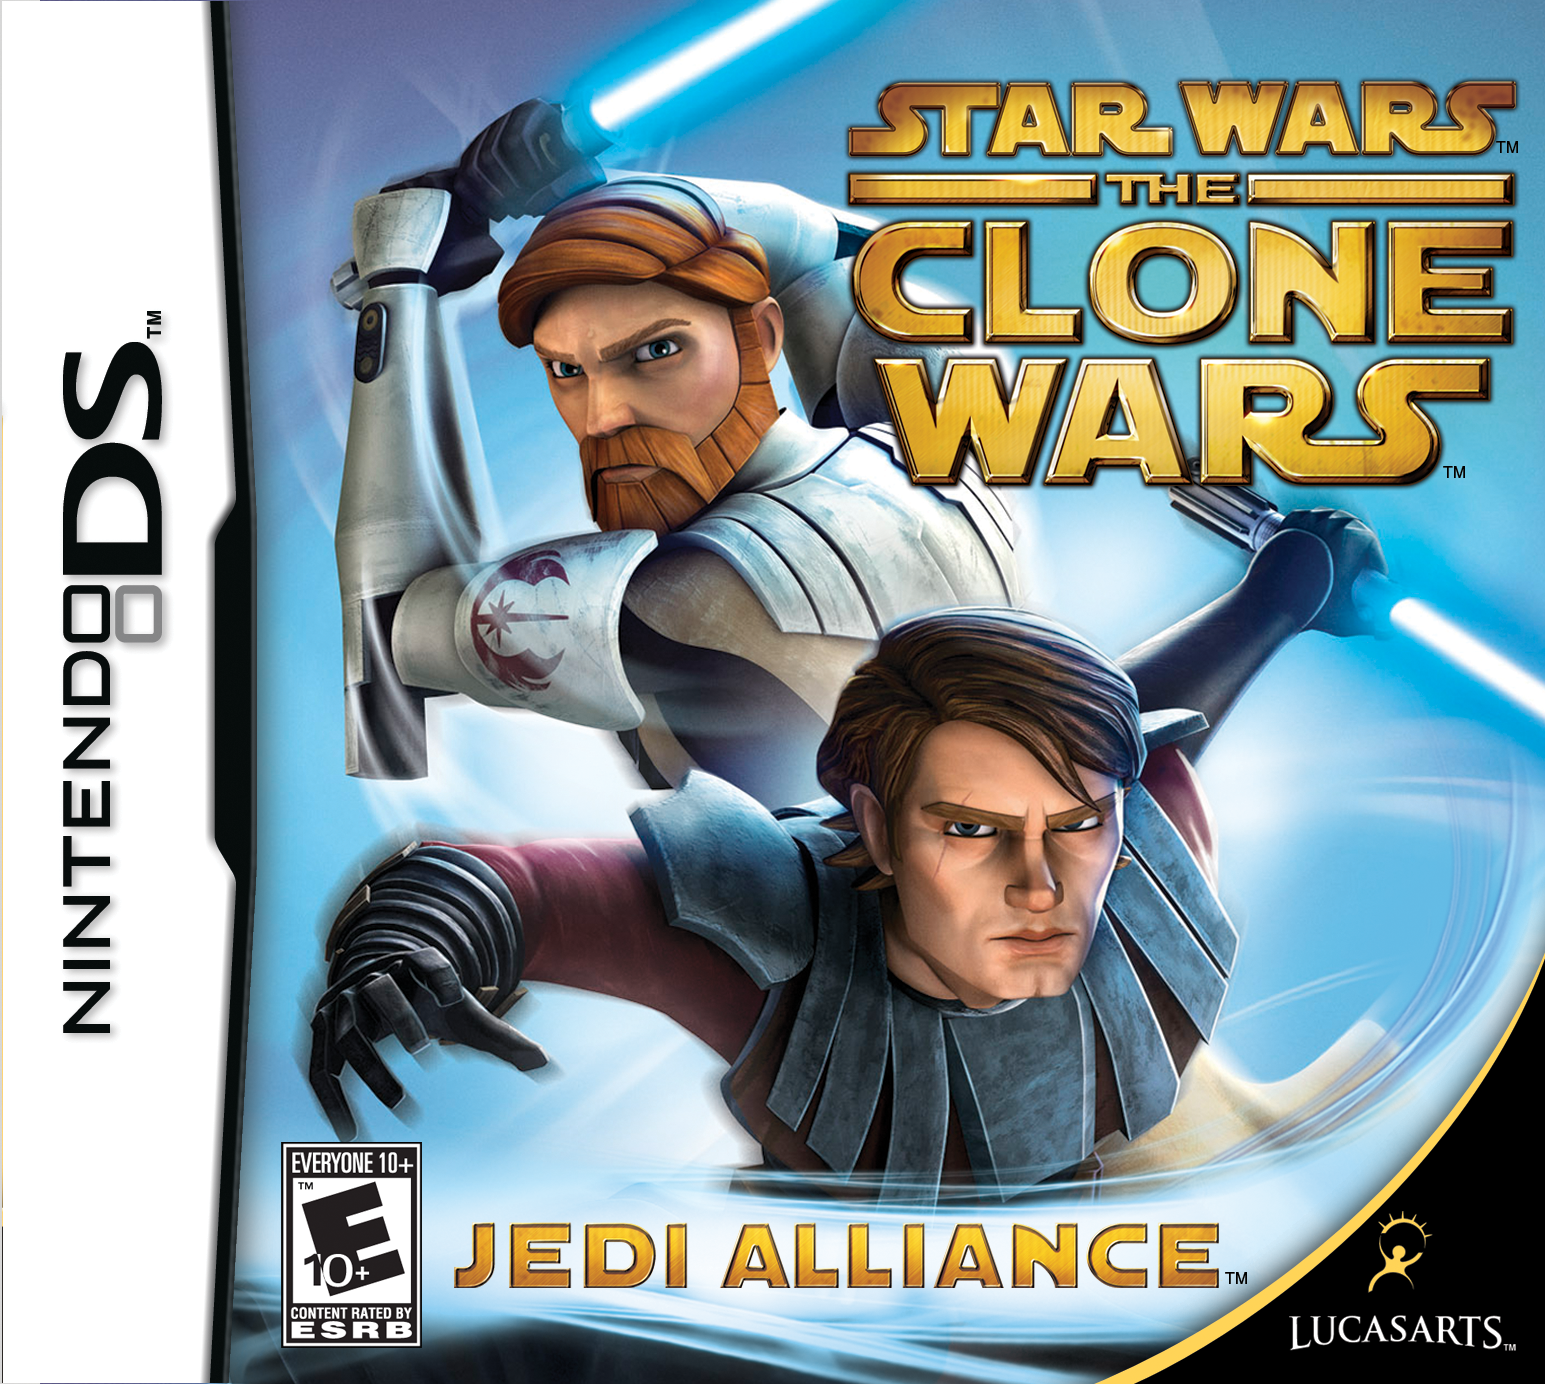 Star Wars: The Clone Wars #15